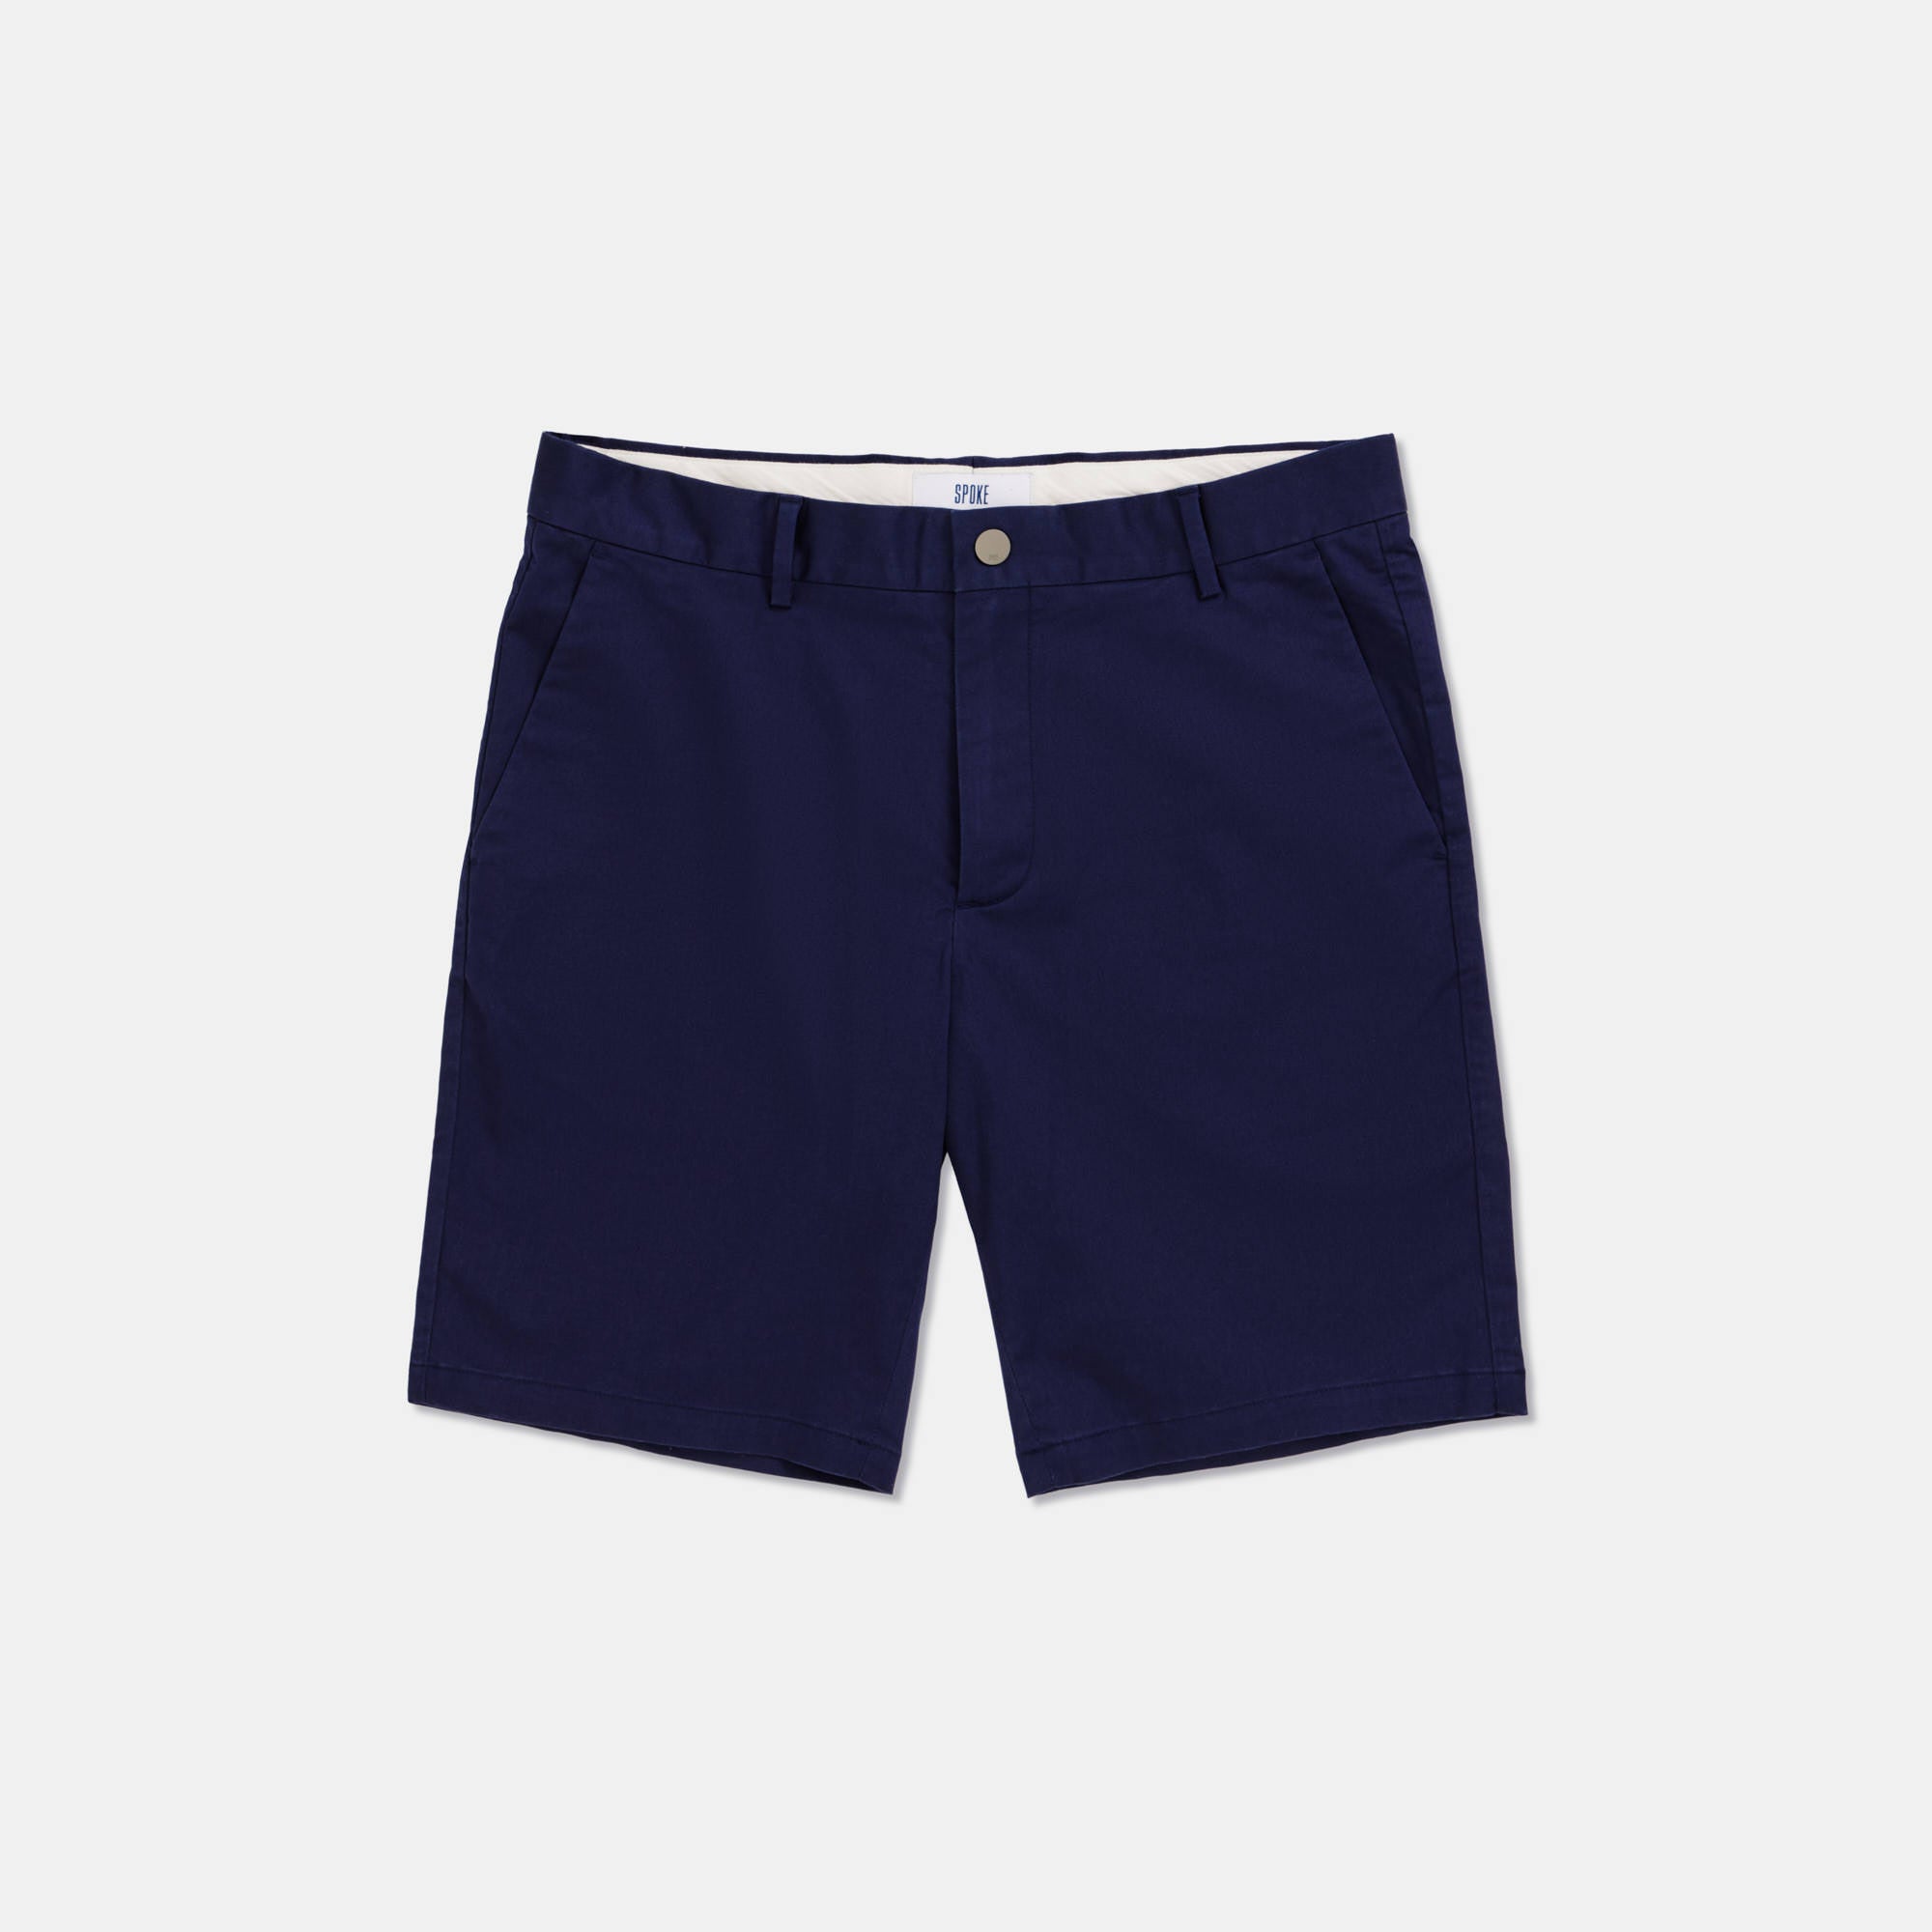 Navy Sharp Shorts - Men's Bespoke Cotton Shorts - SPOKE - SPOKE